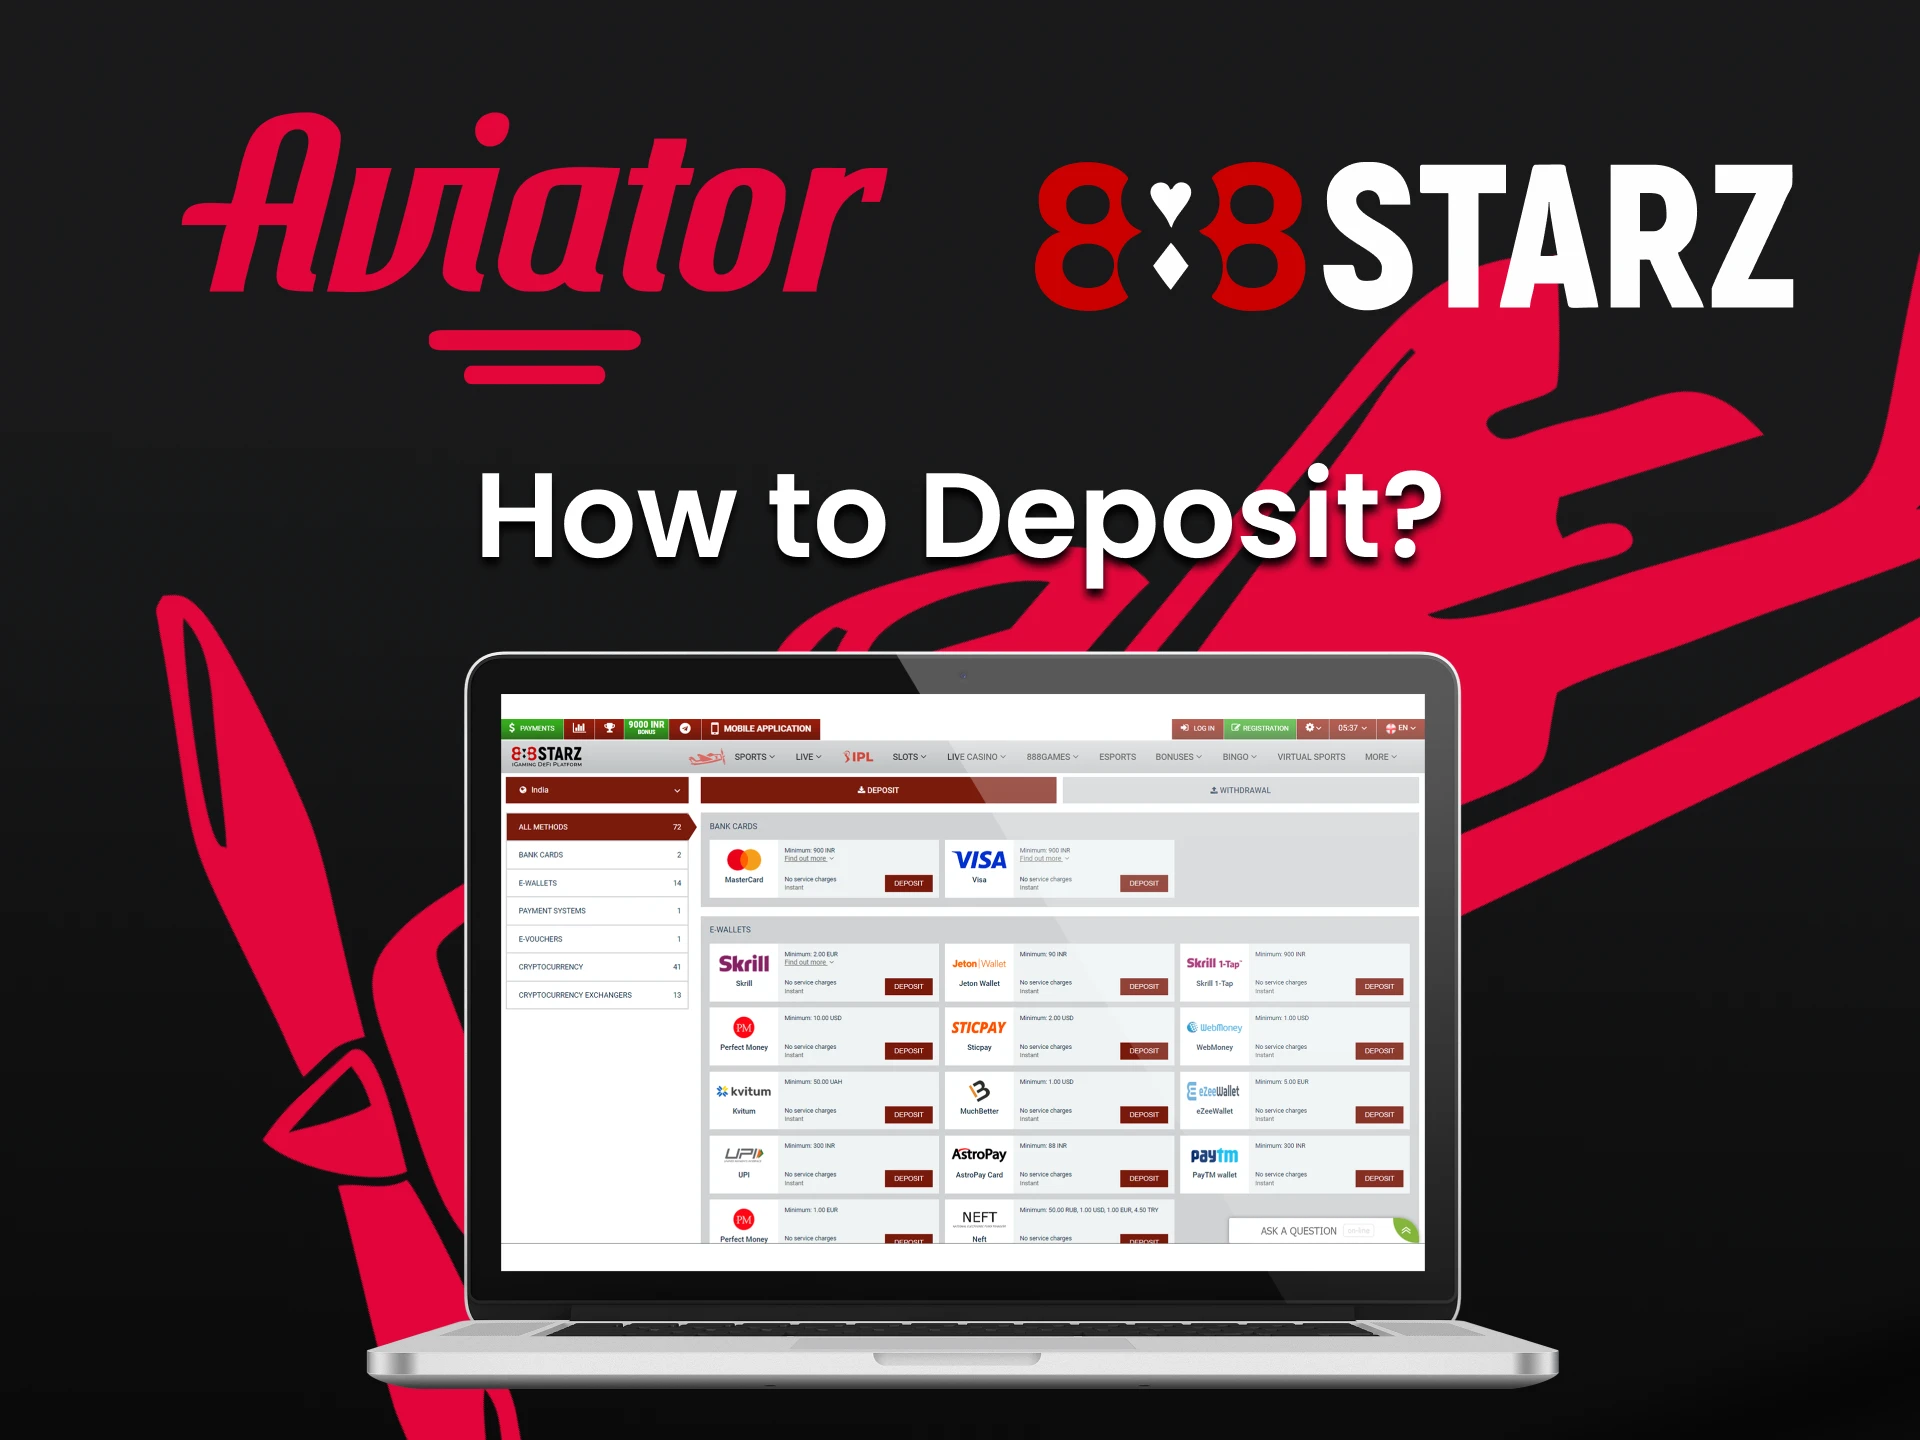 Choose a convenient way to deposit at 888starz.